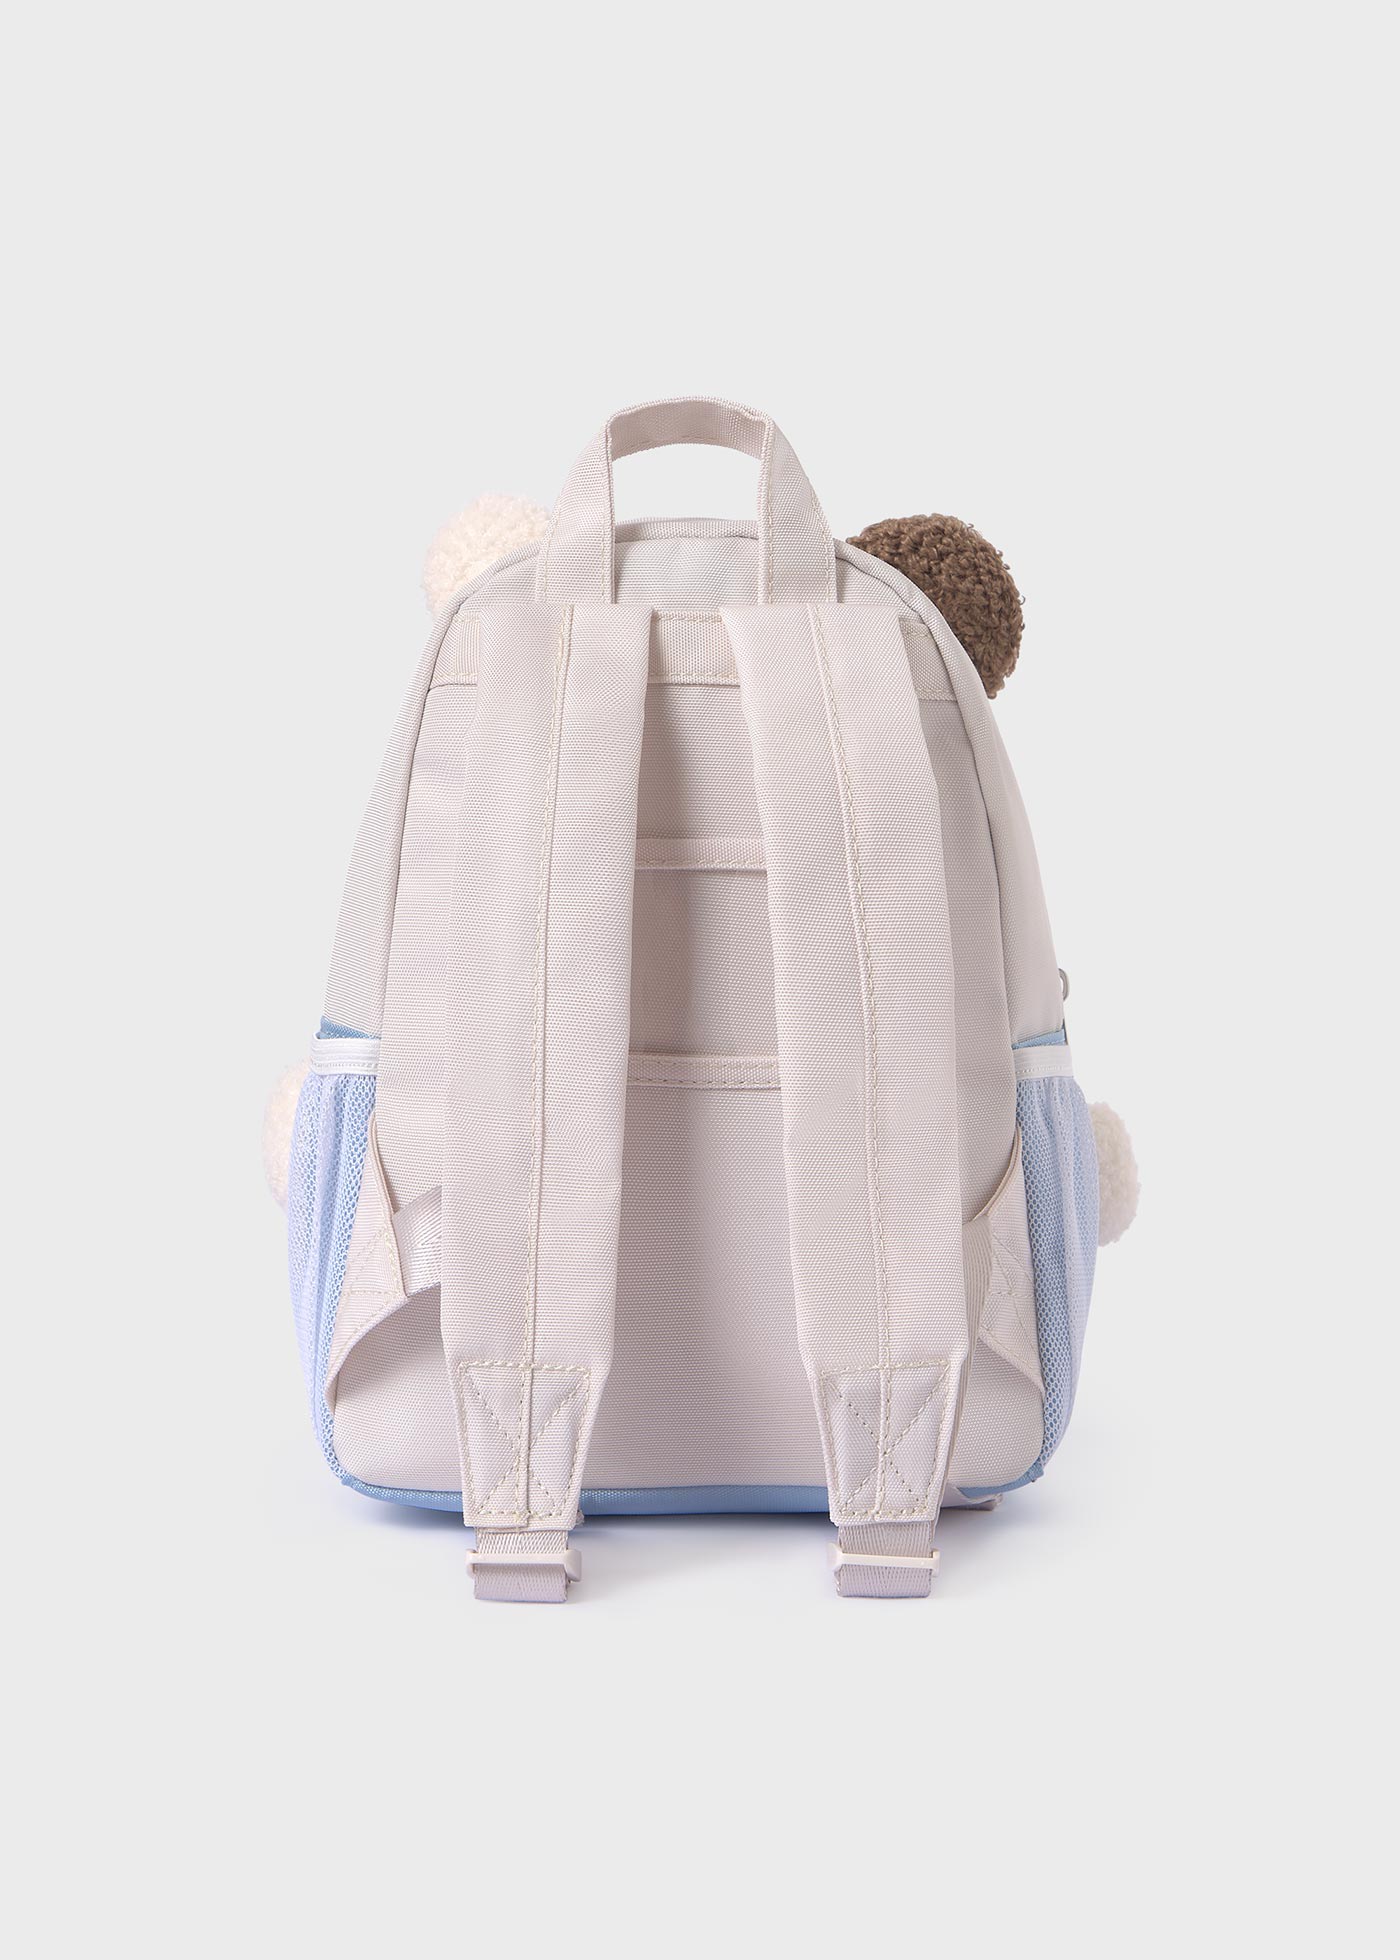 Baby nursey backpack